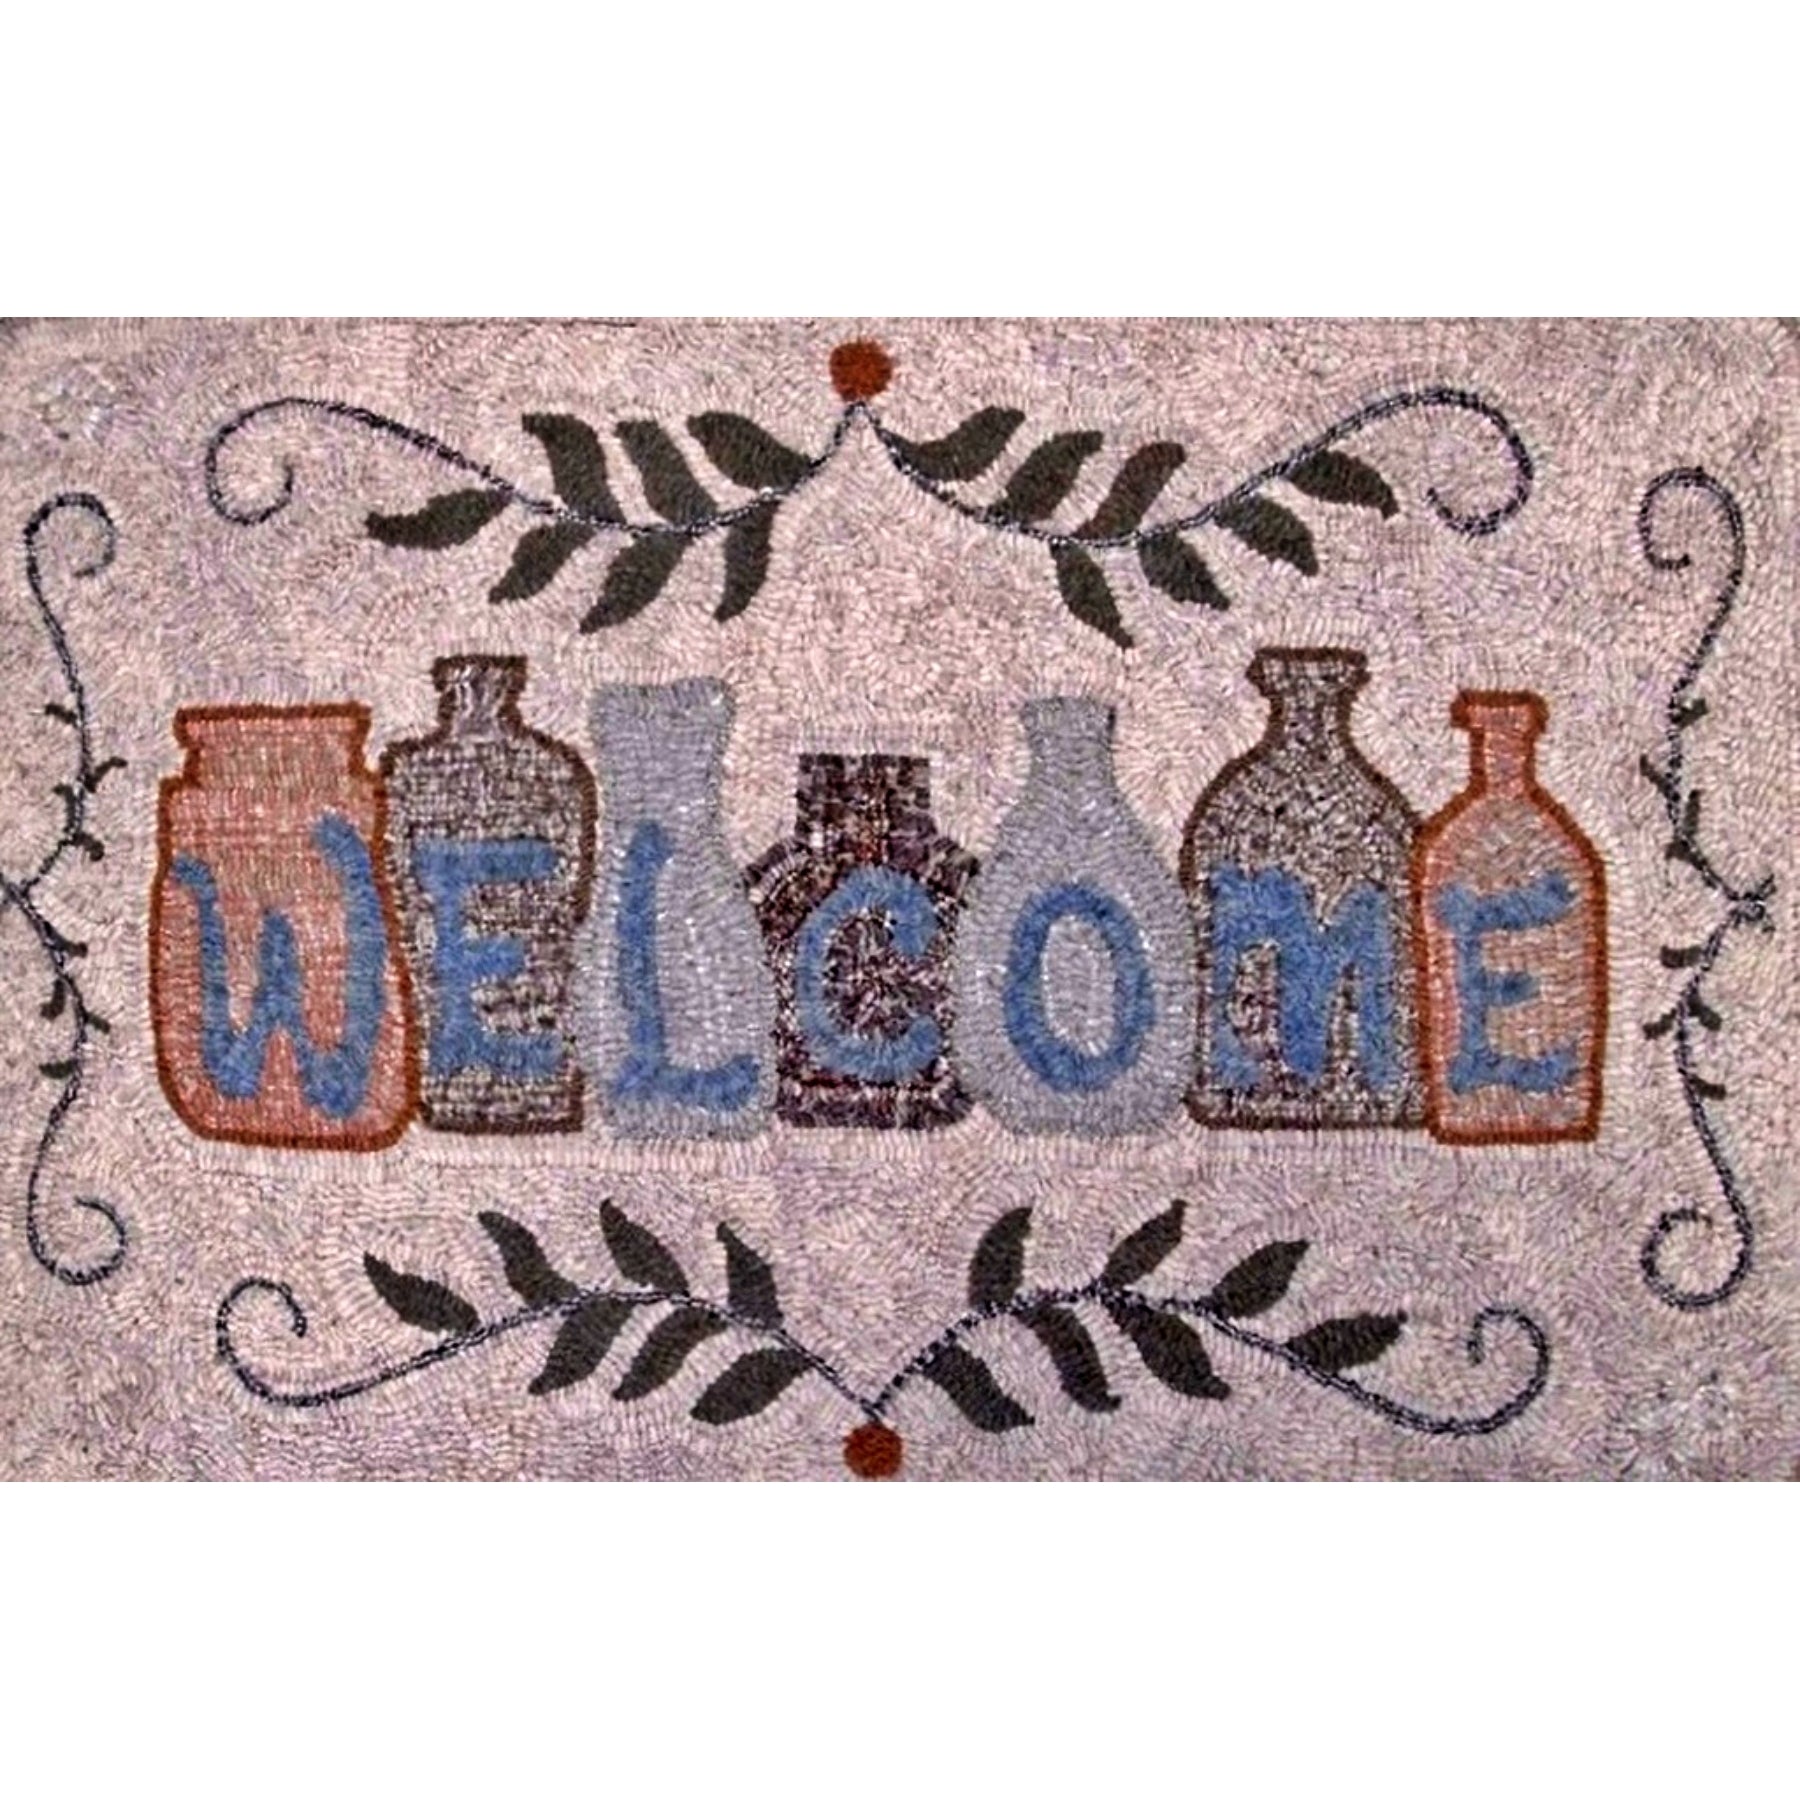 Welcome Jars, rug hooked by Connie Bradley